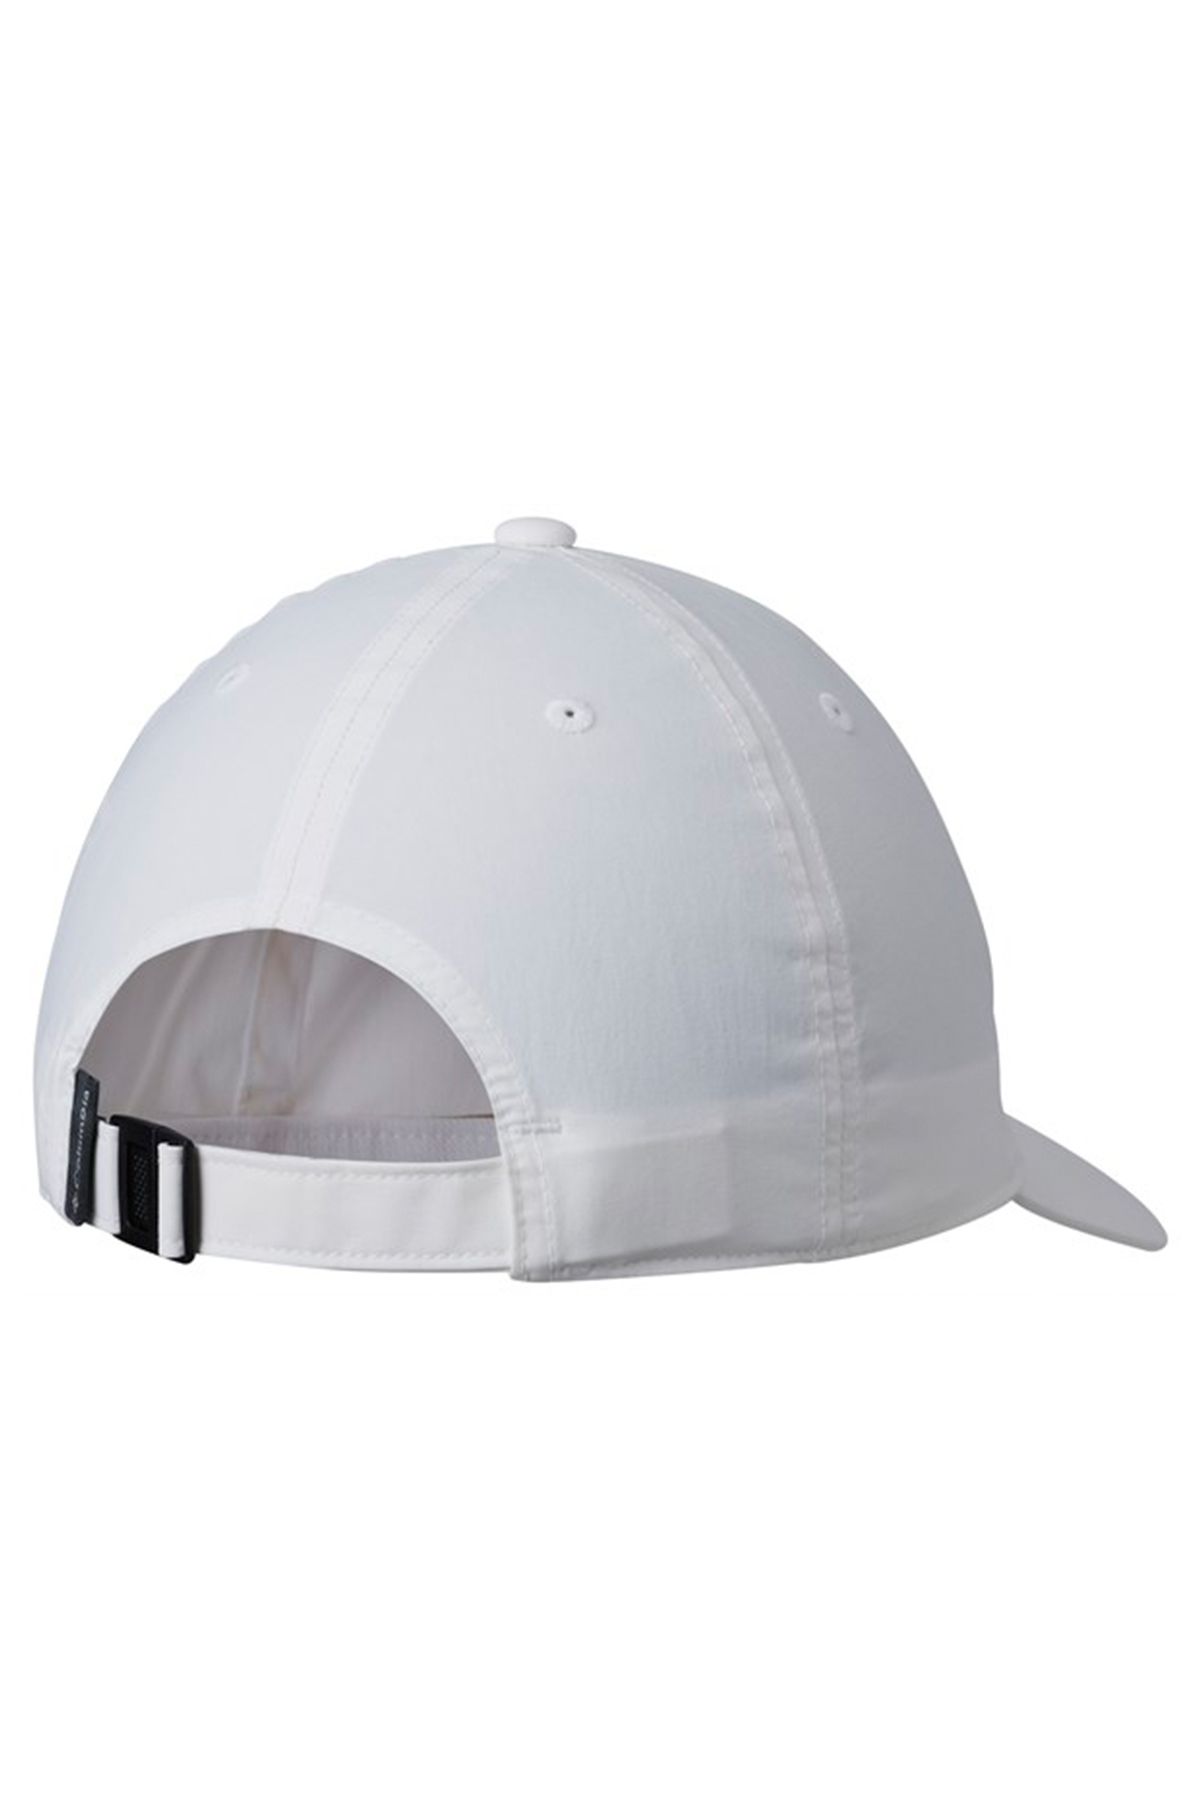 Columbia Unisex White Hat 1819641100-100